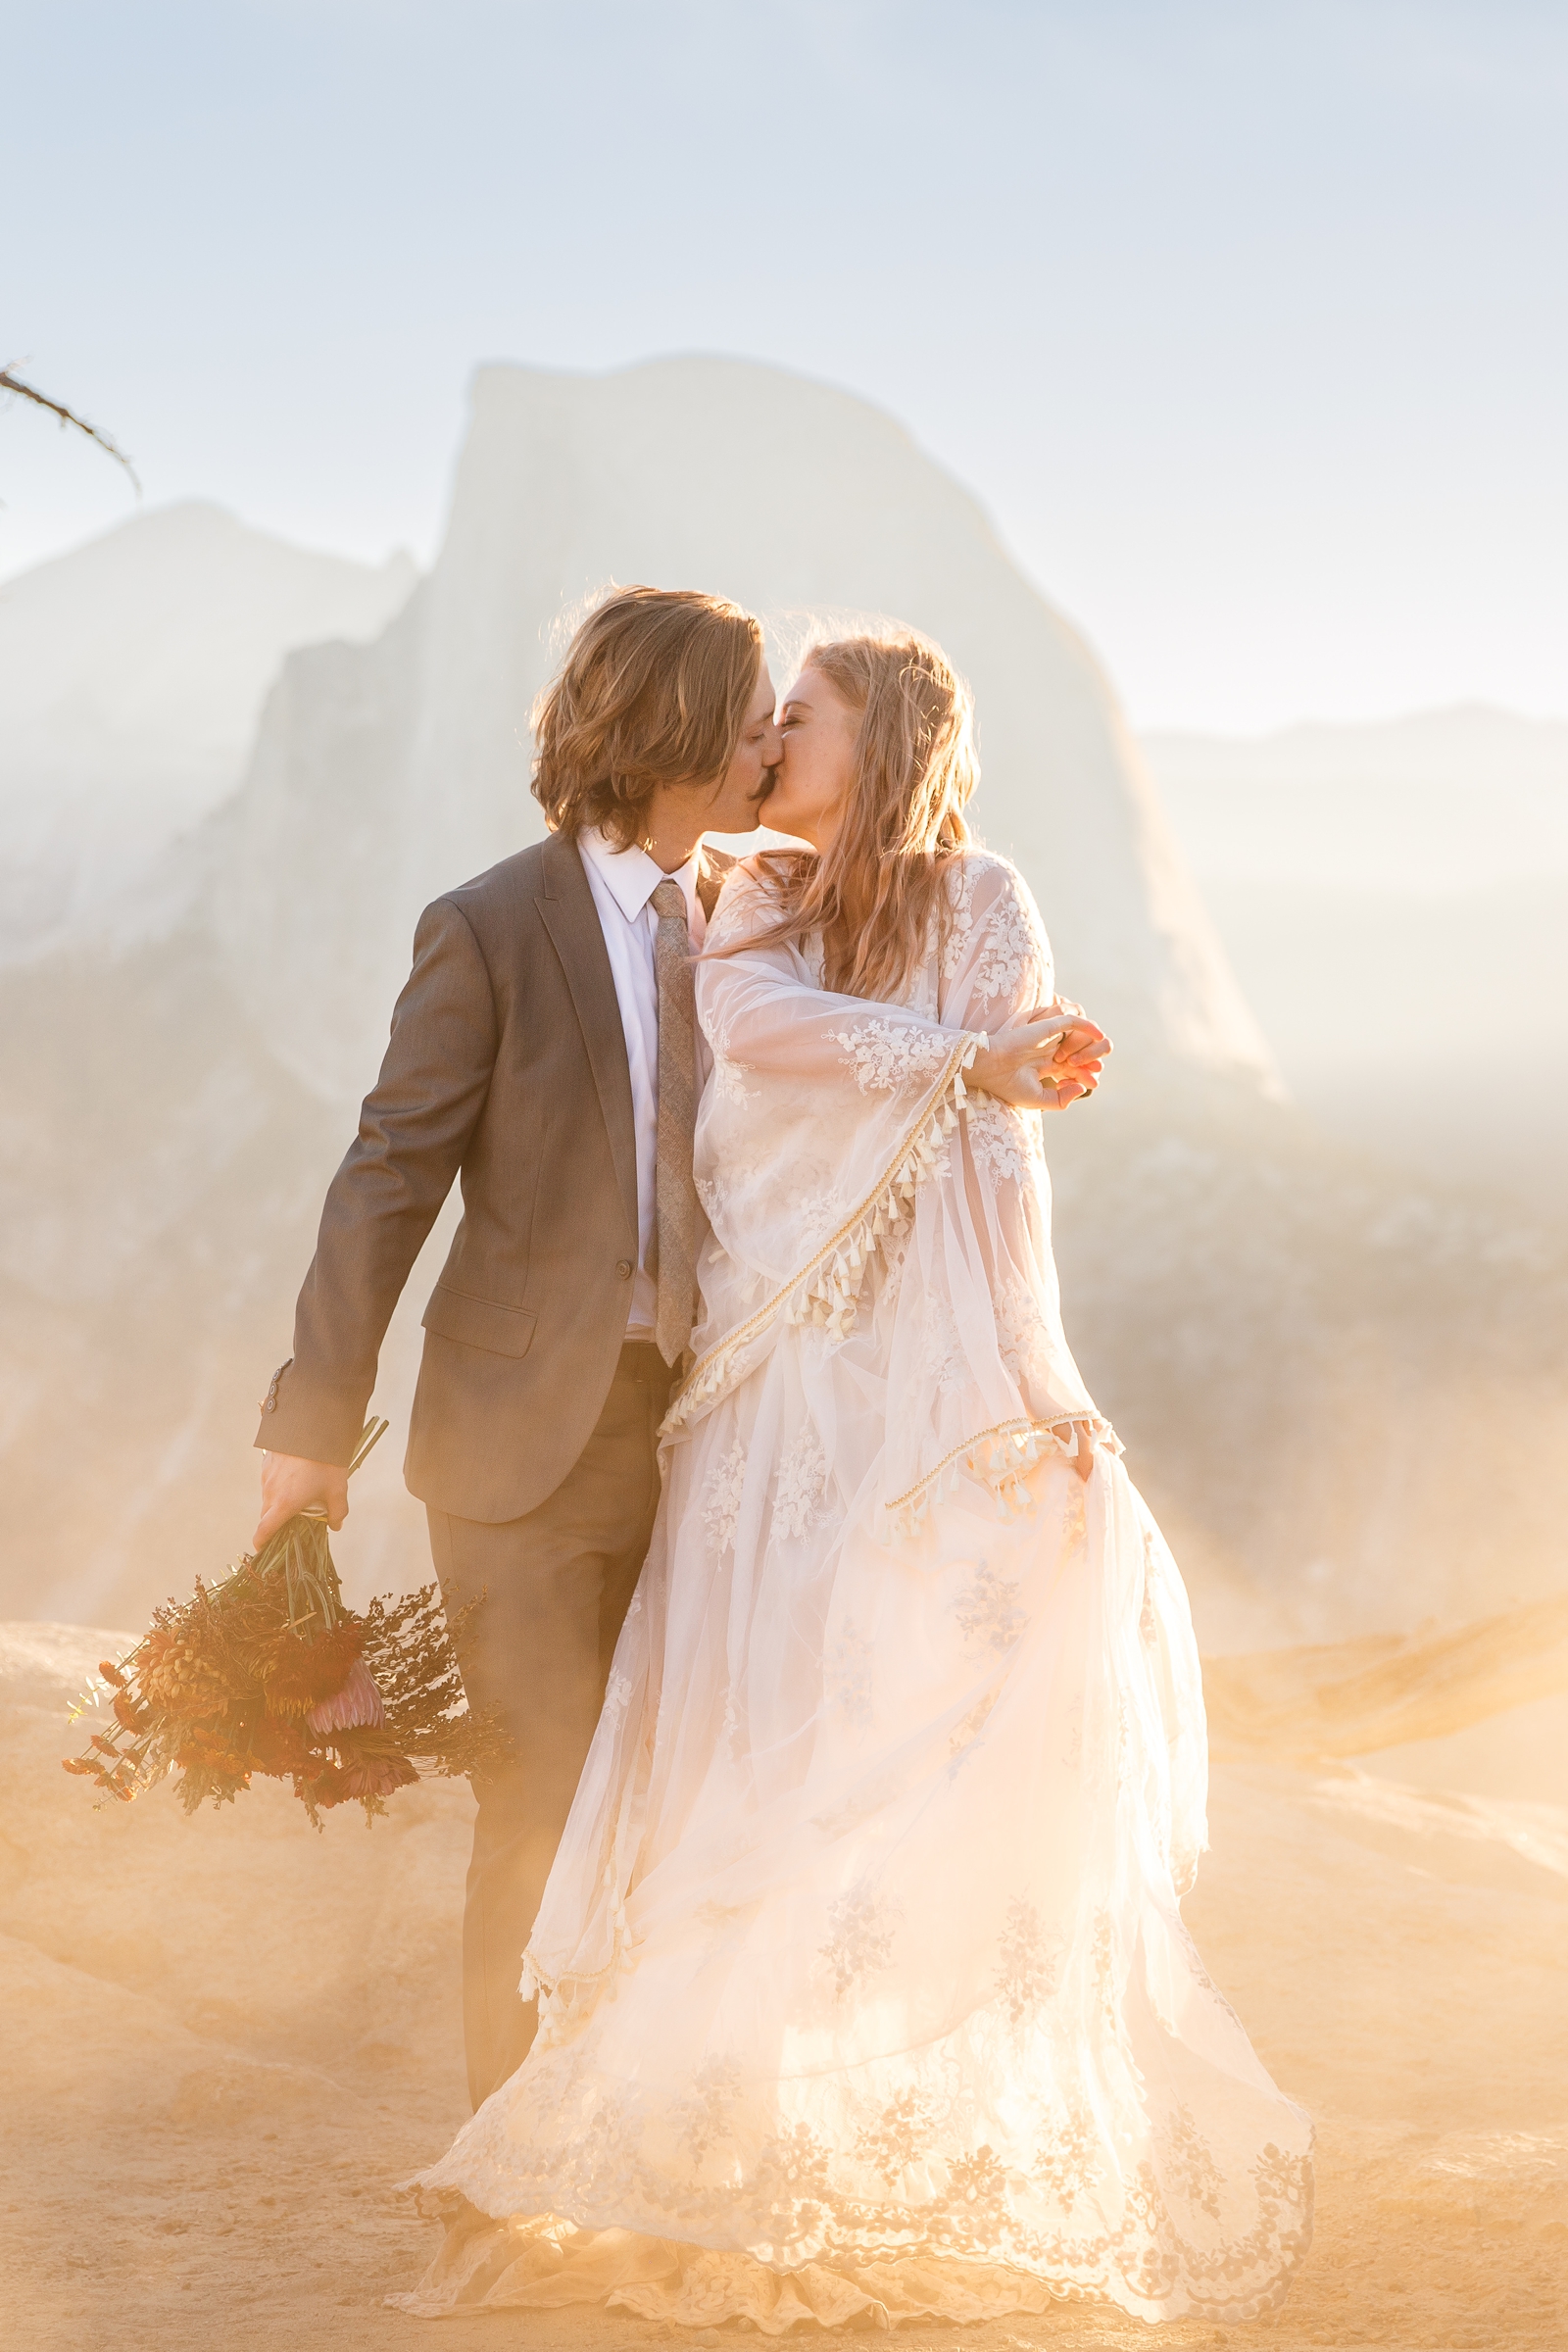 Misty golden hour kisses at this couple's Yosemite Glacier Point elopement.